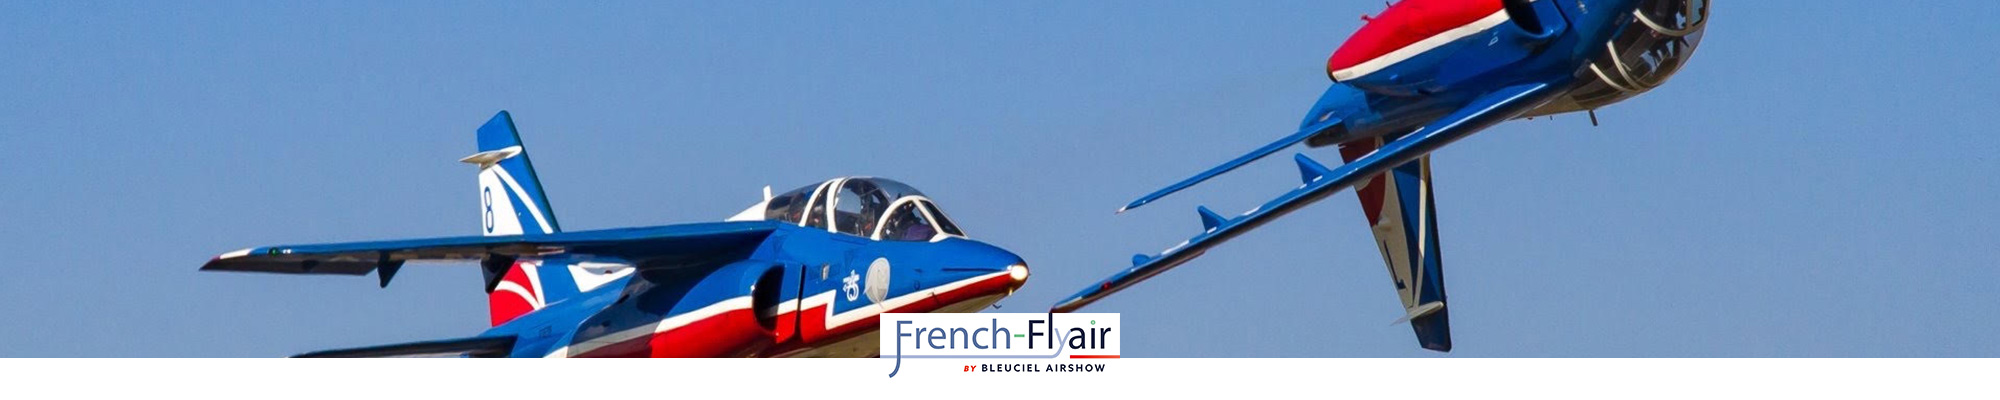 French Flyair